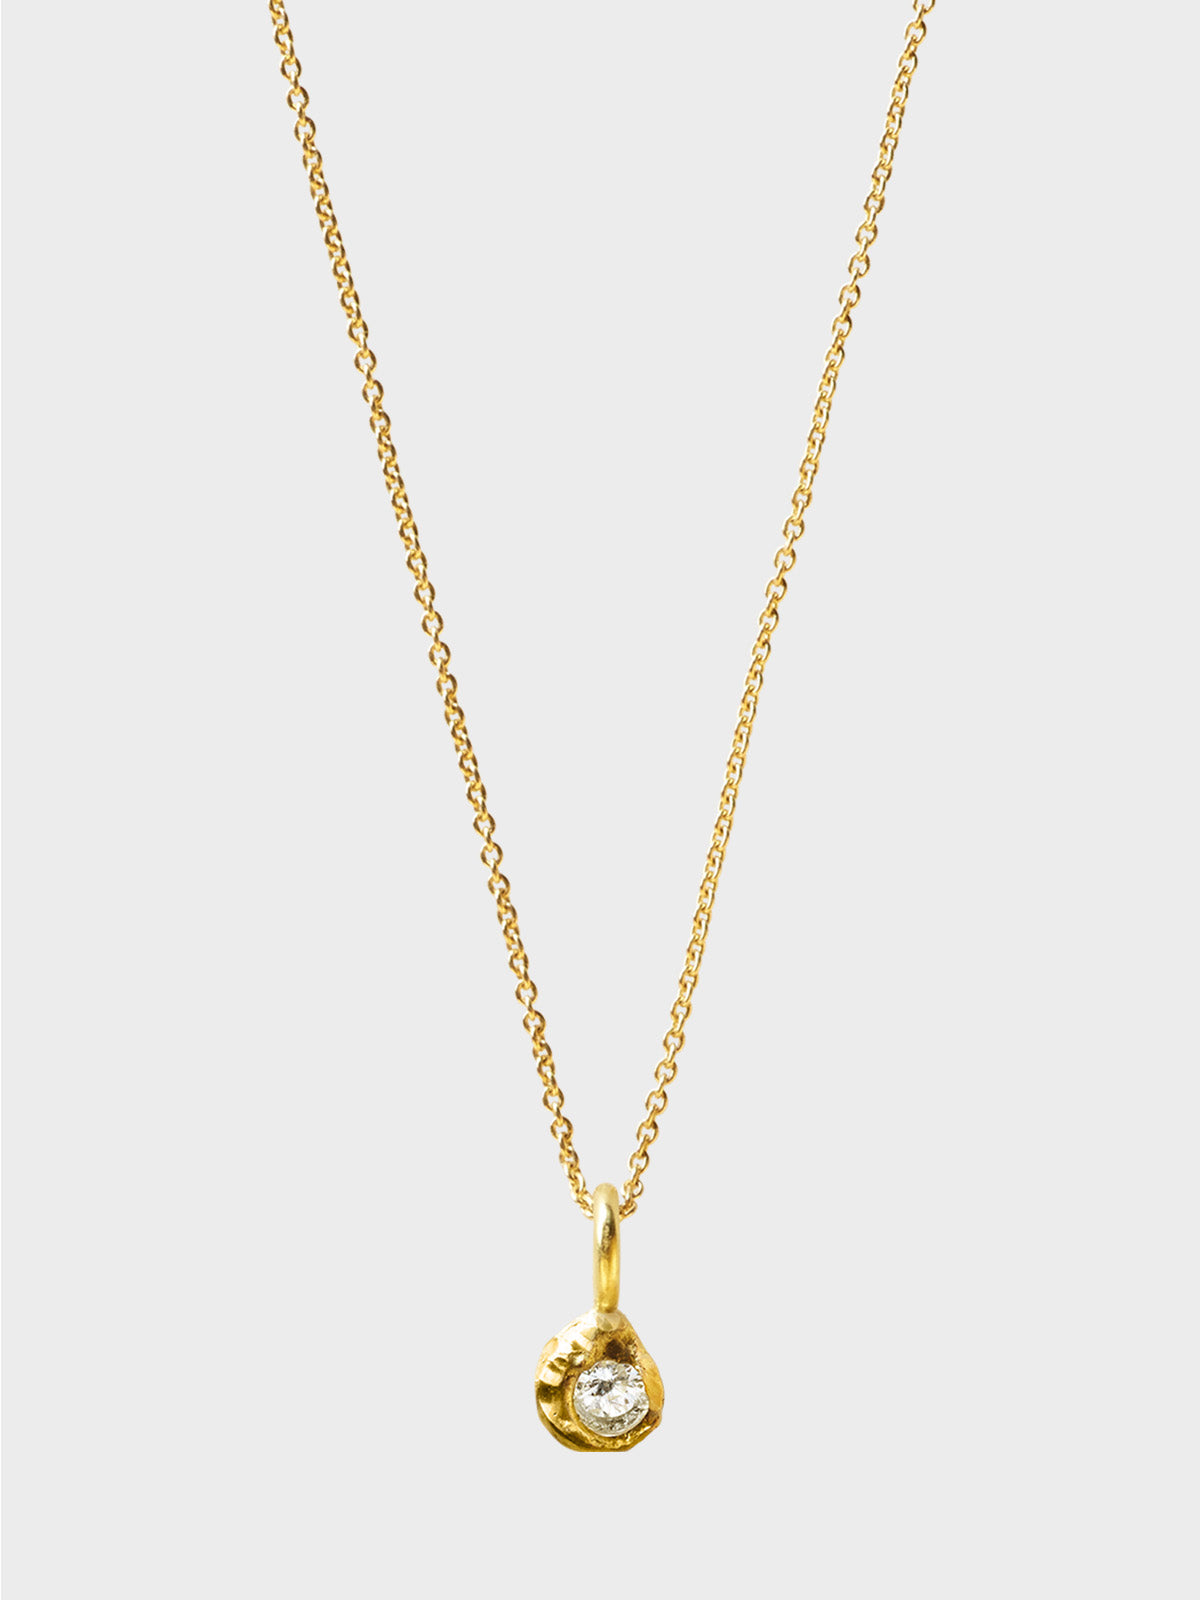 Elhanati - Iman 0.10ct Necklace in 18k Yellow Gold